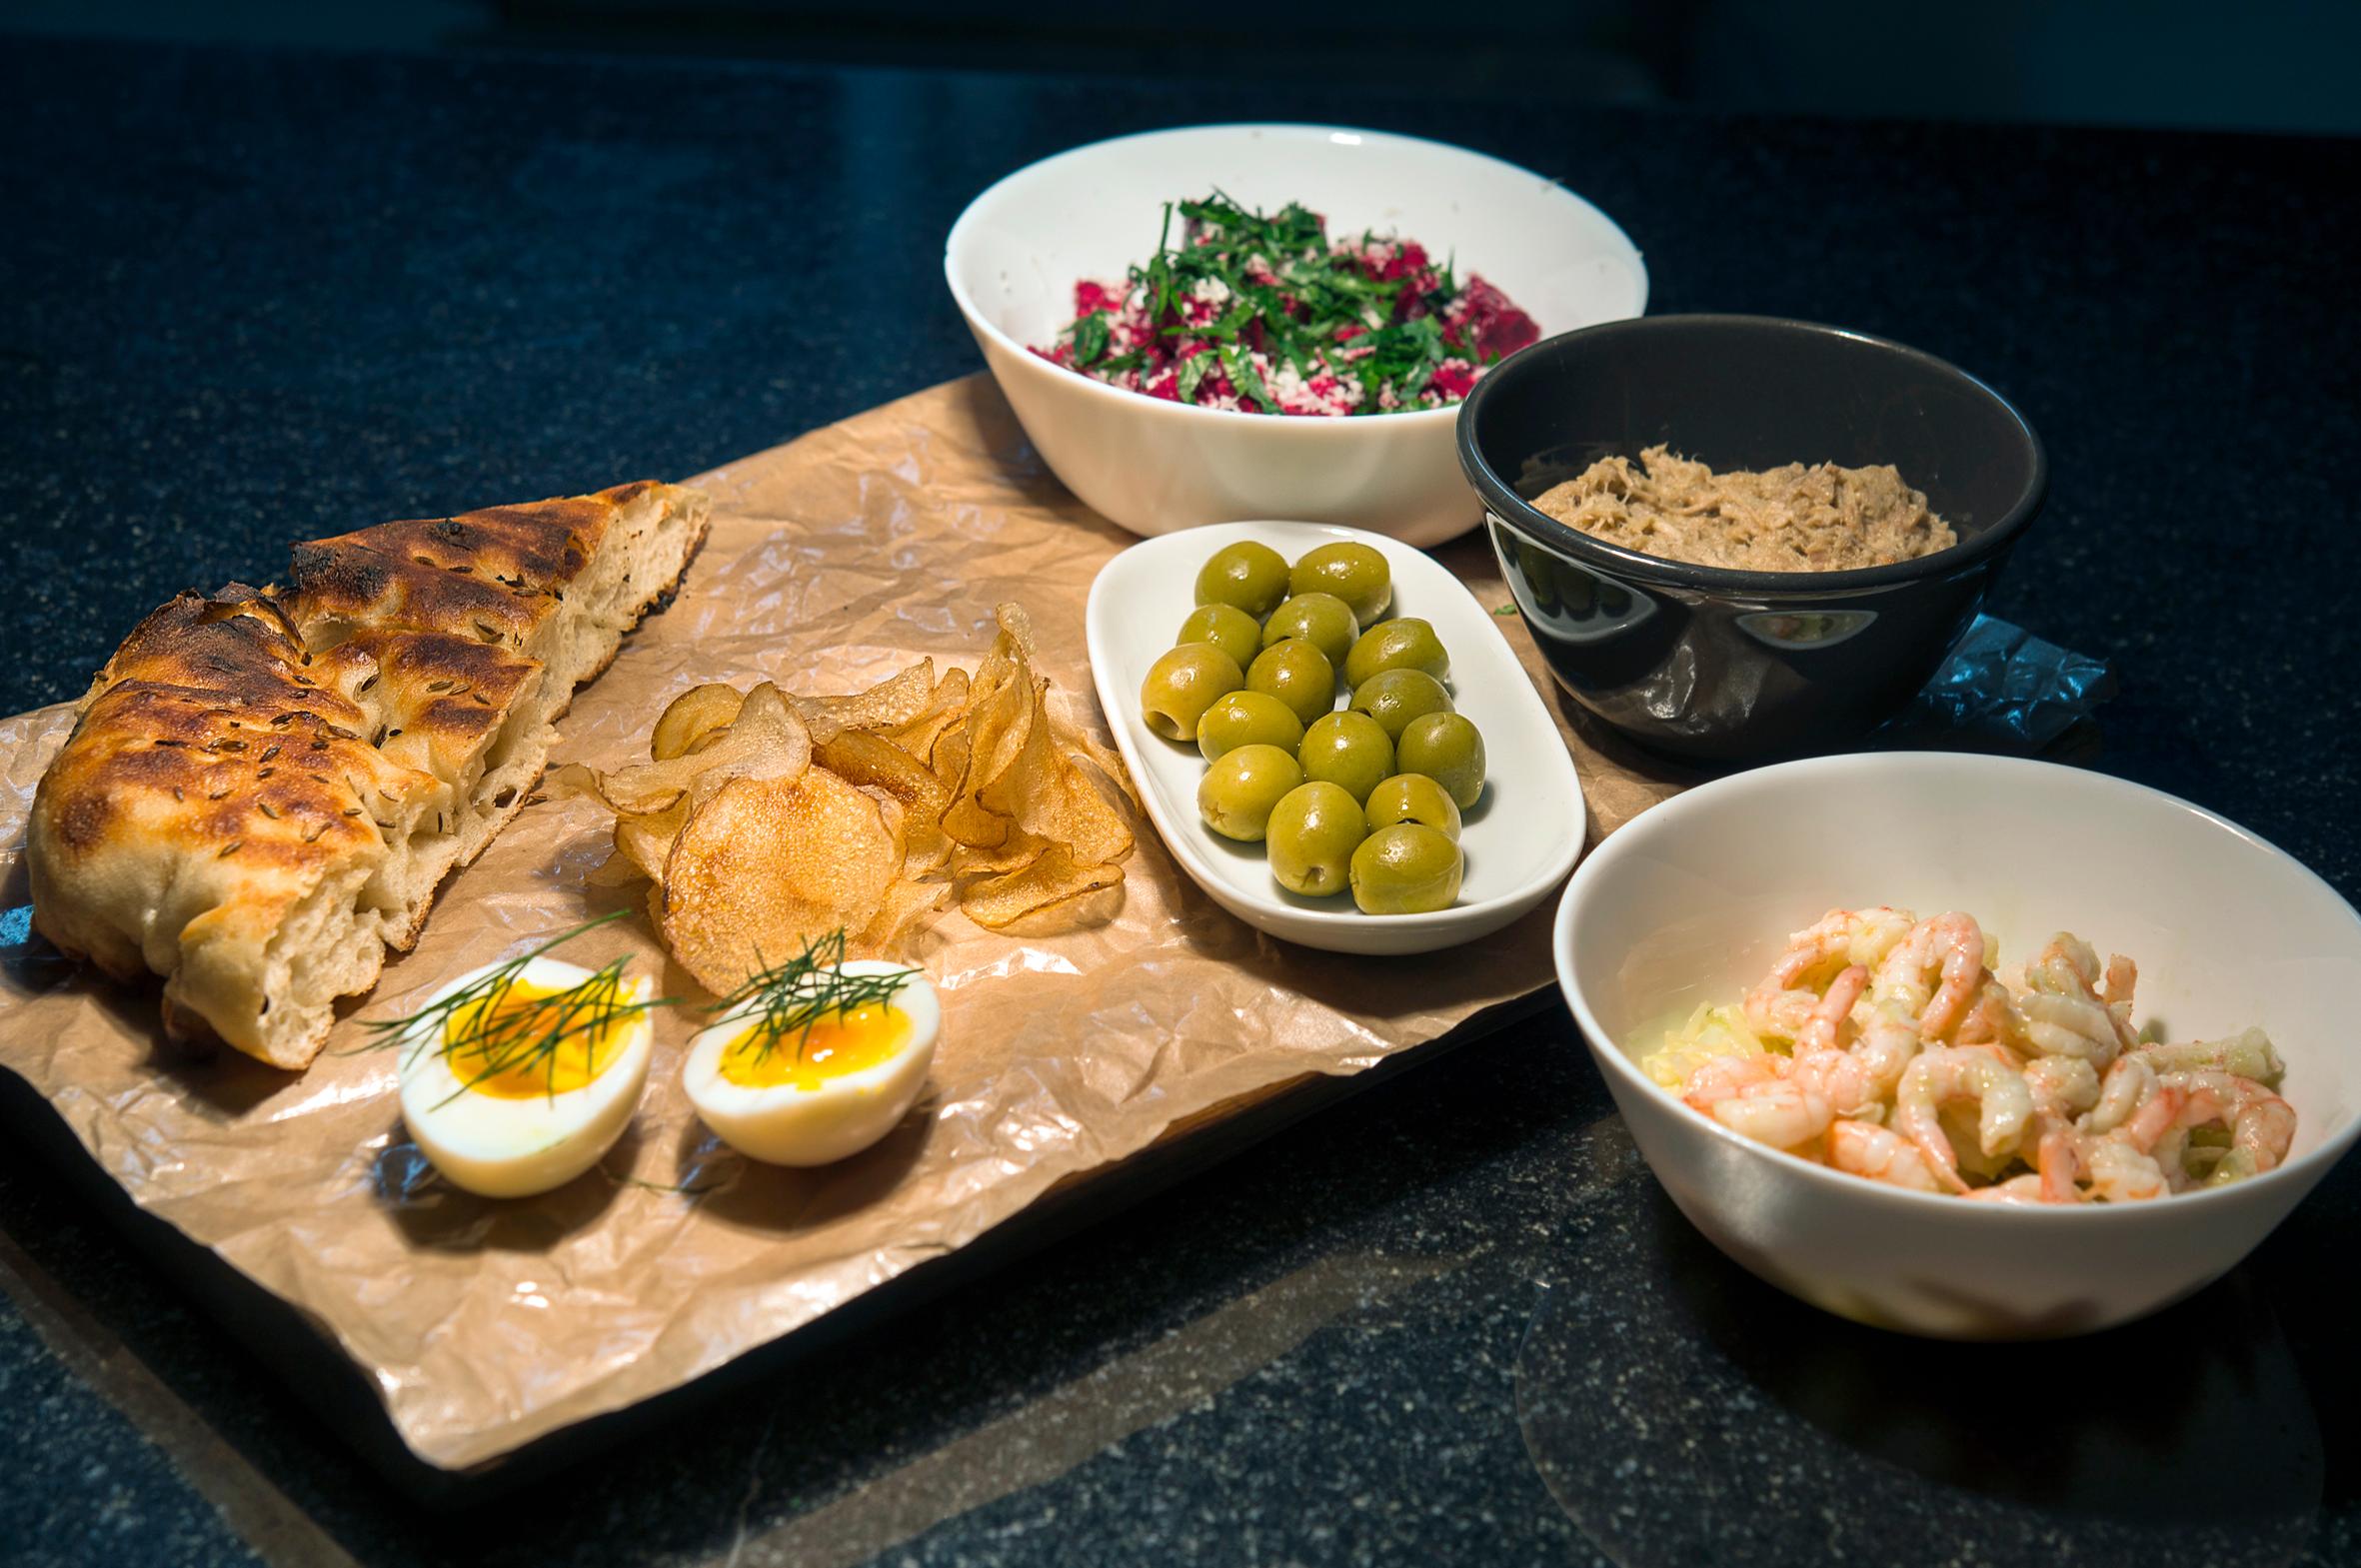 Snack på fjøl; Grilletbrød, rødbettartar, rillettes av svineribbe kokt i andefett, sylta egg, potetchips, oliven og reker med coleslaw